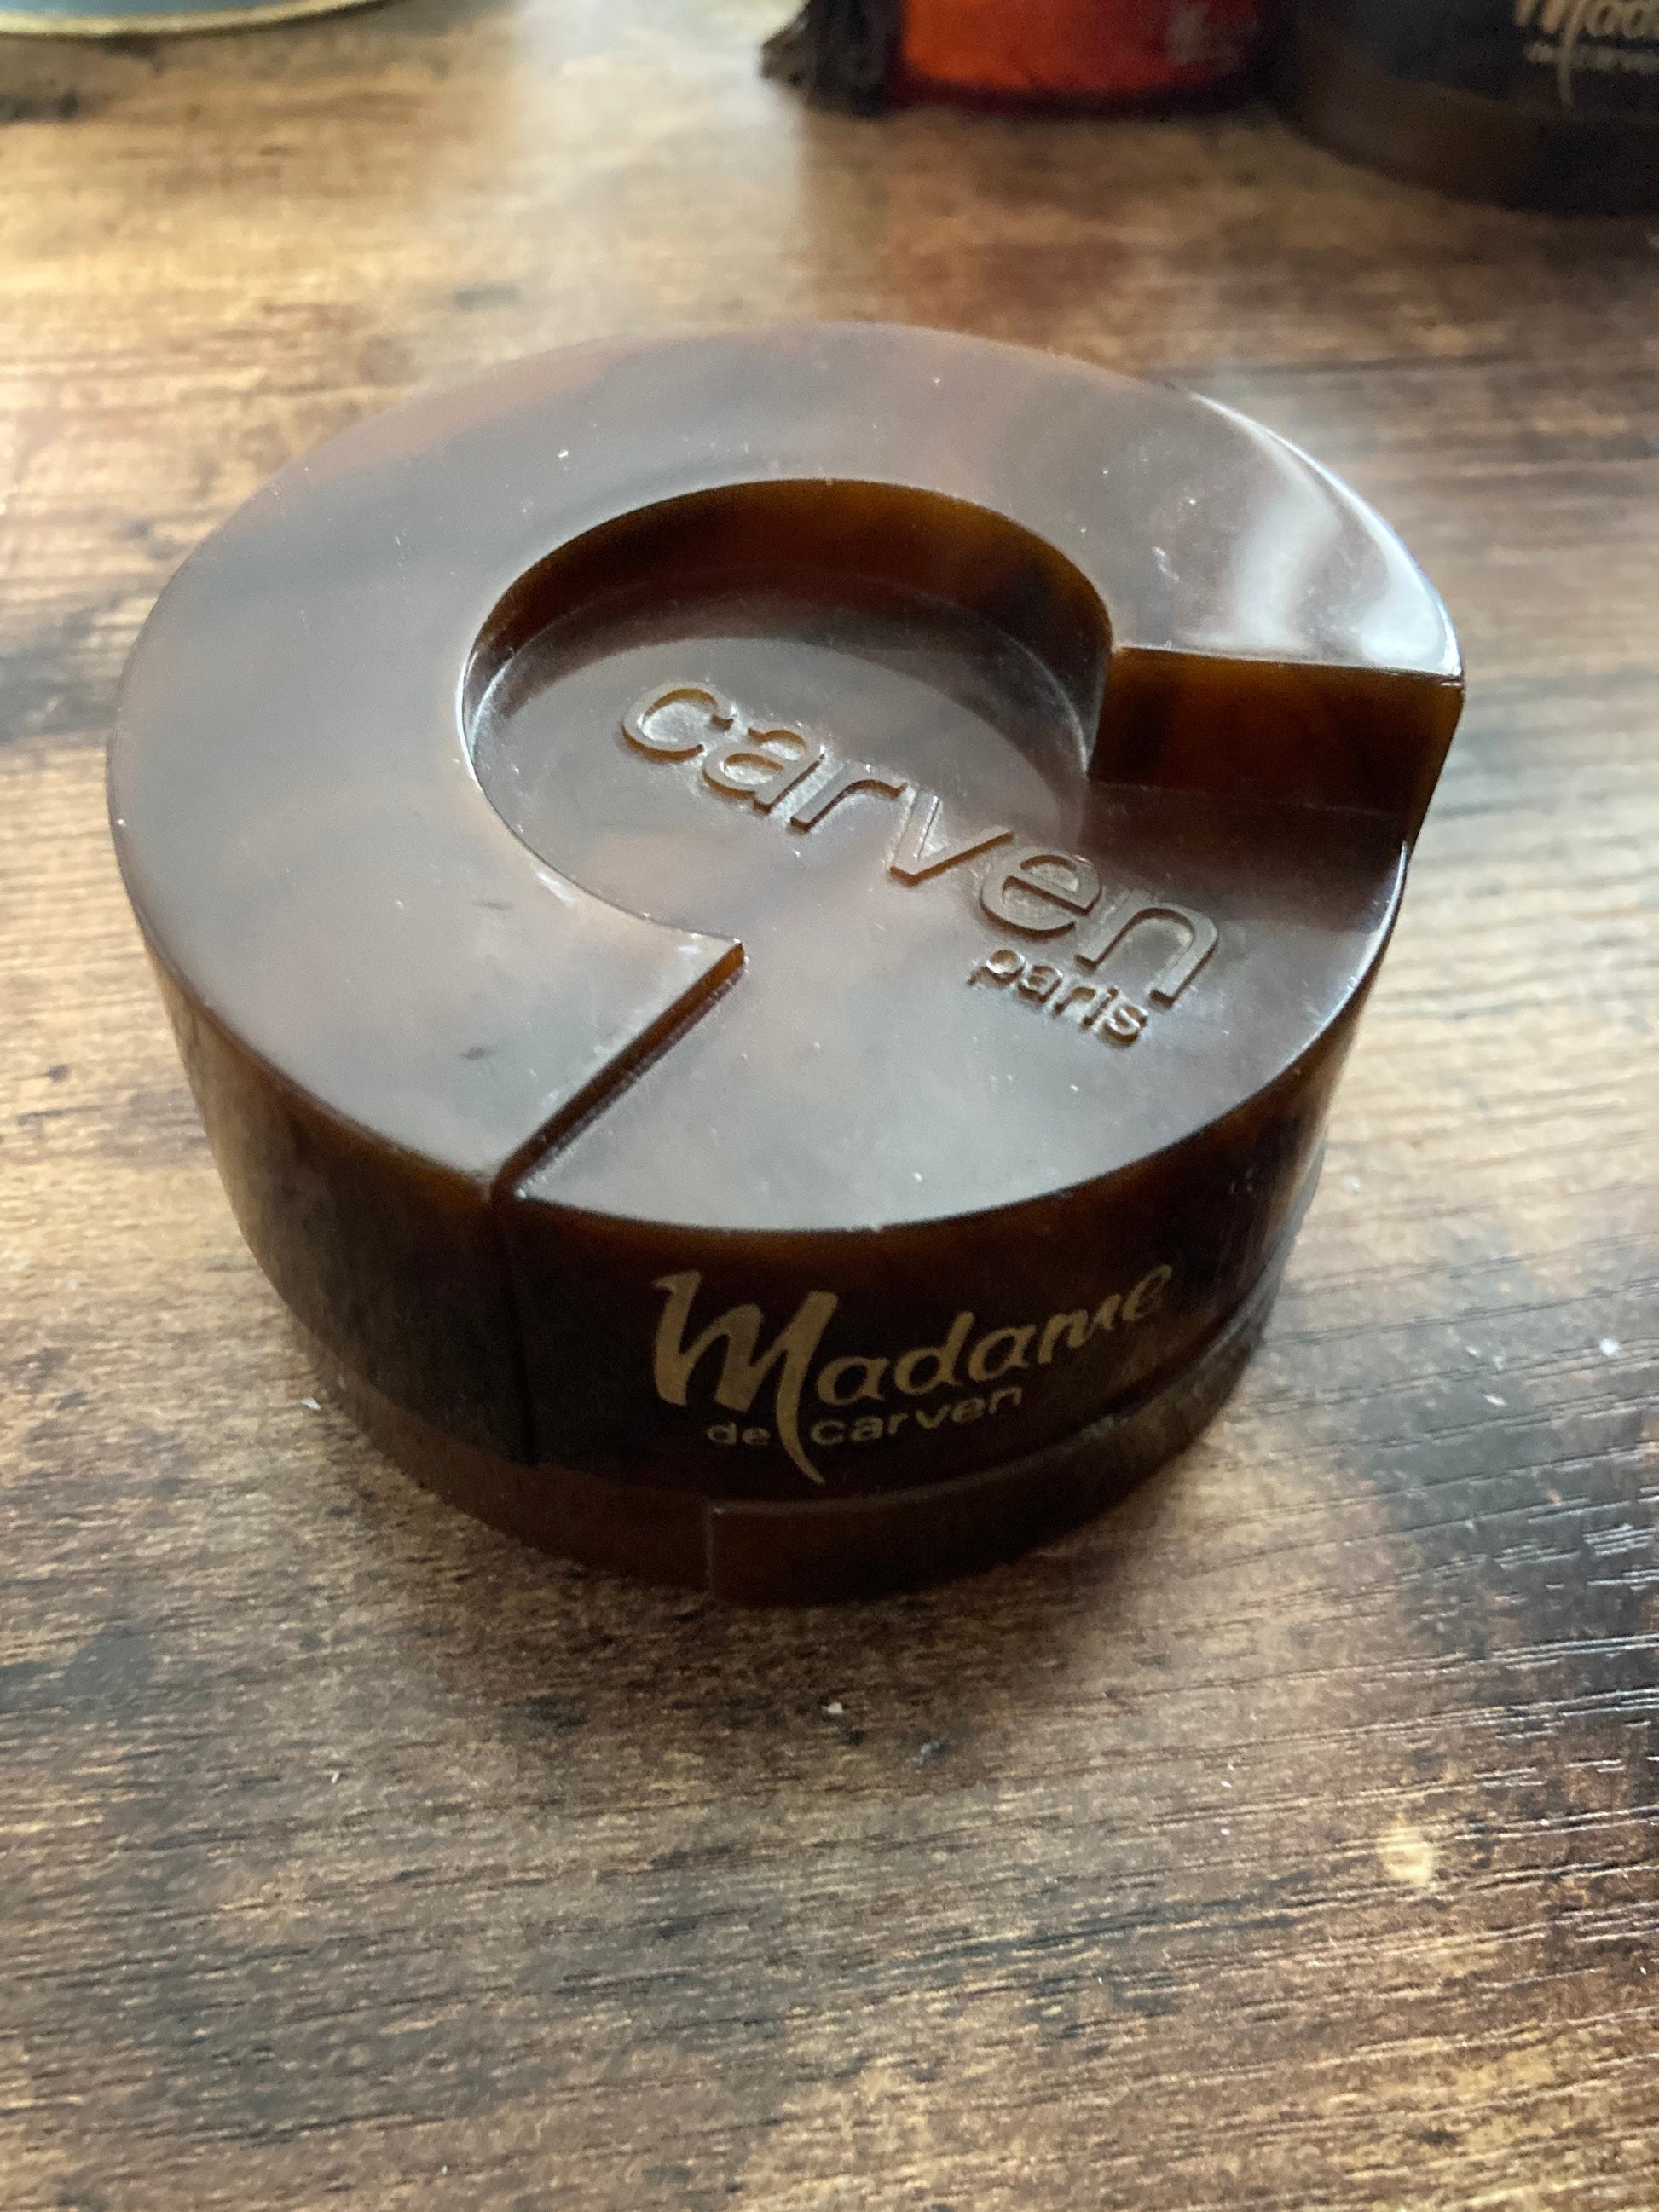 Madame de carven Paris sealed soap in brown plastic box 1970s 1980s vintage cosmetics